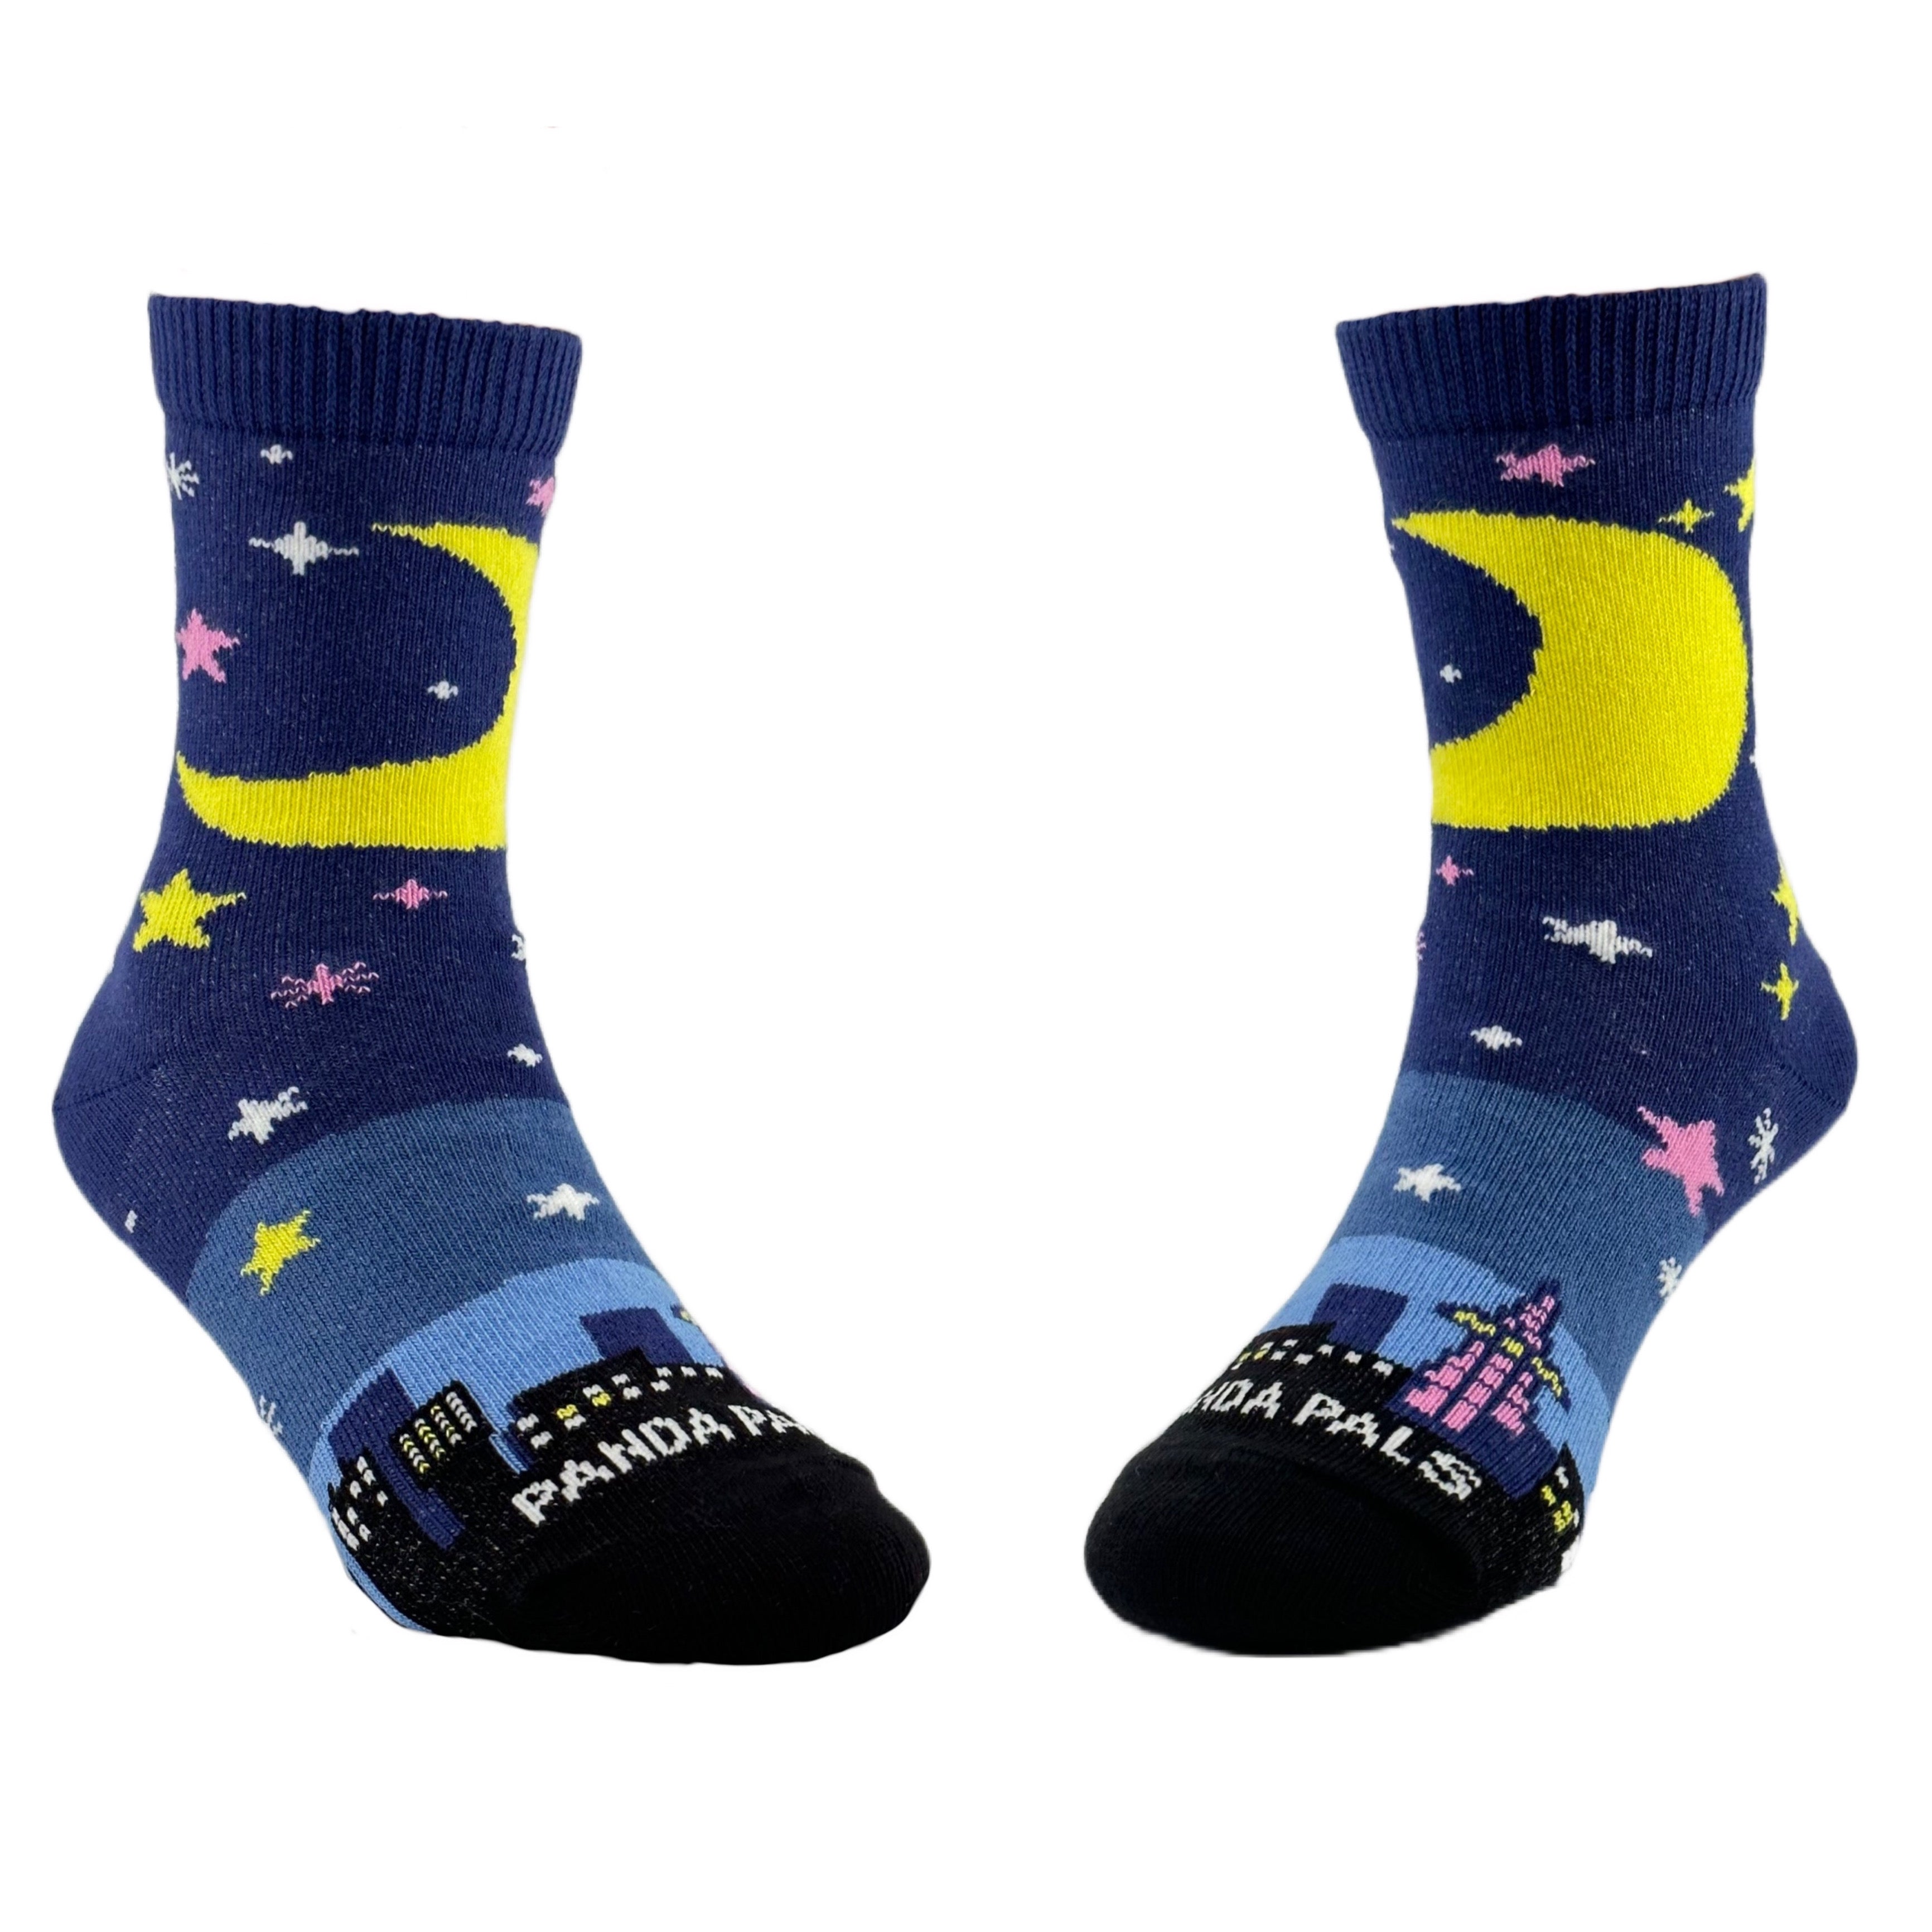 Night Sky Kids Socks from the Sock Panda (Age 3-7)